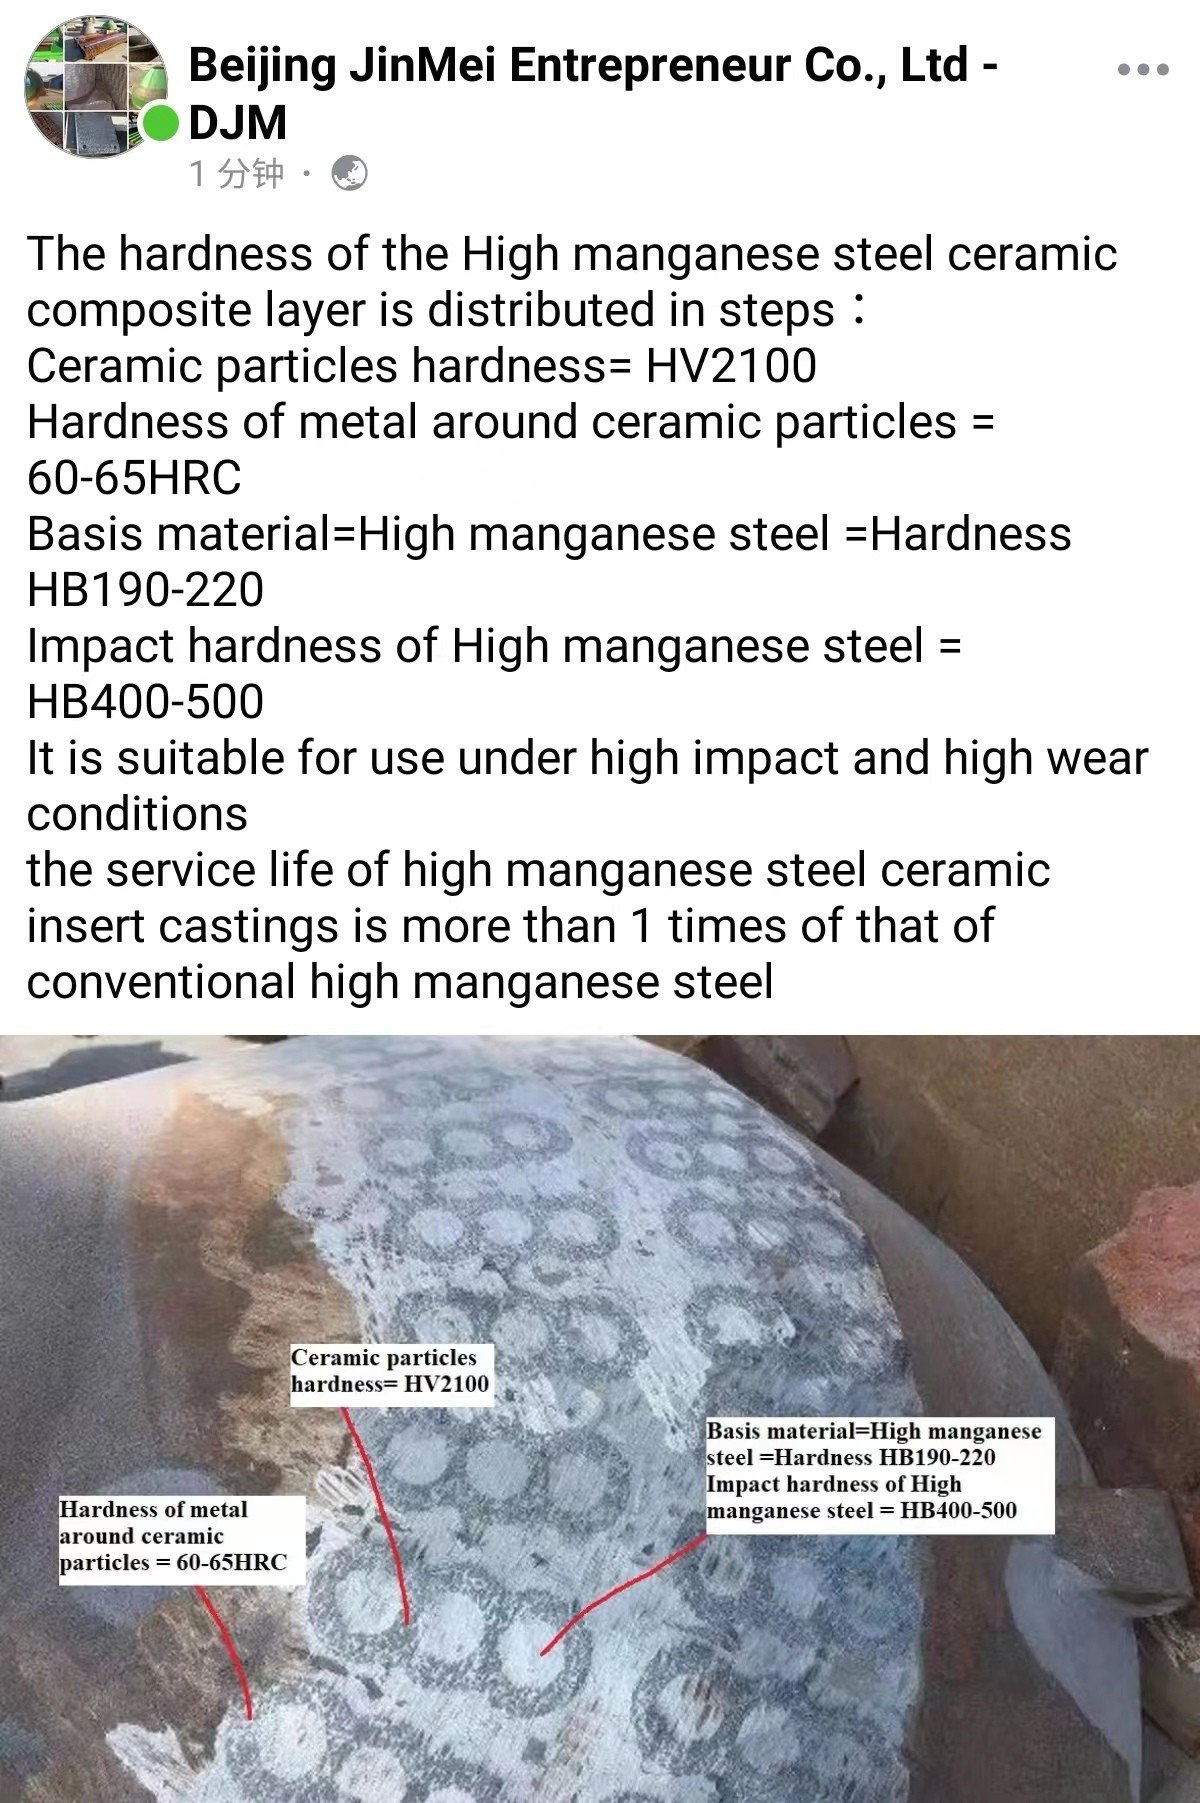  High manganese steel ceramic insert castings